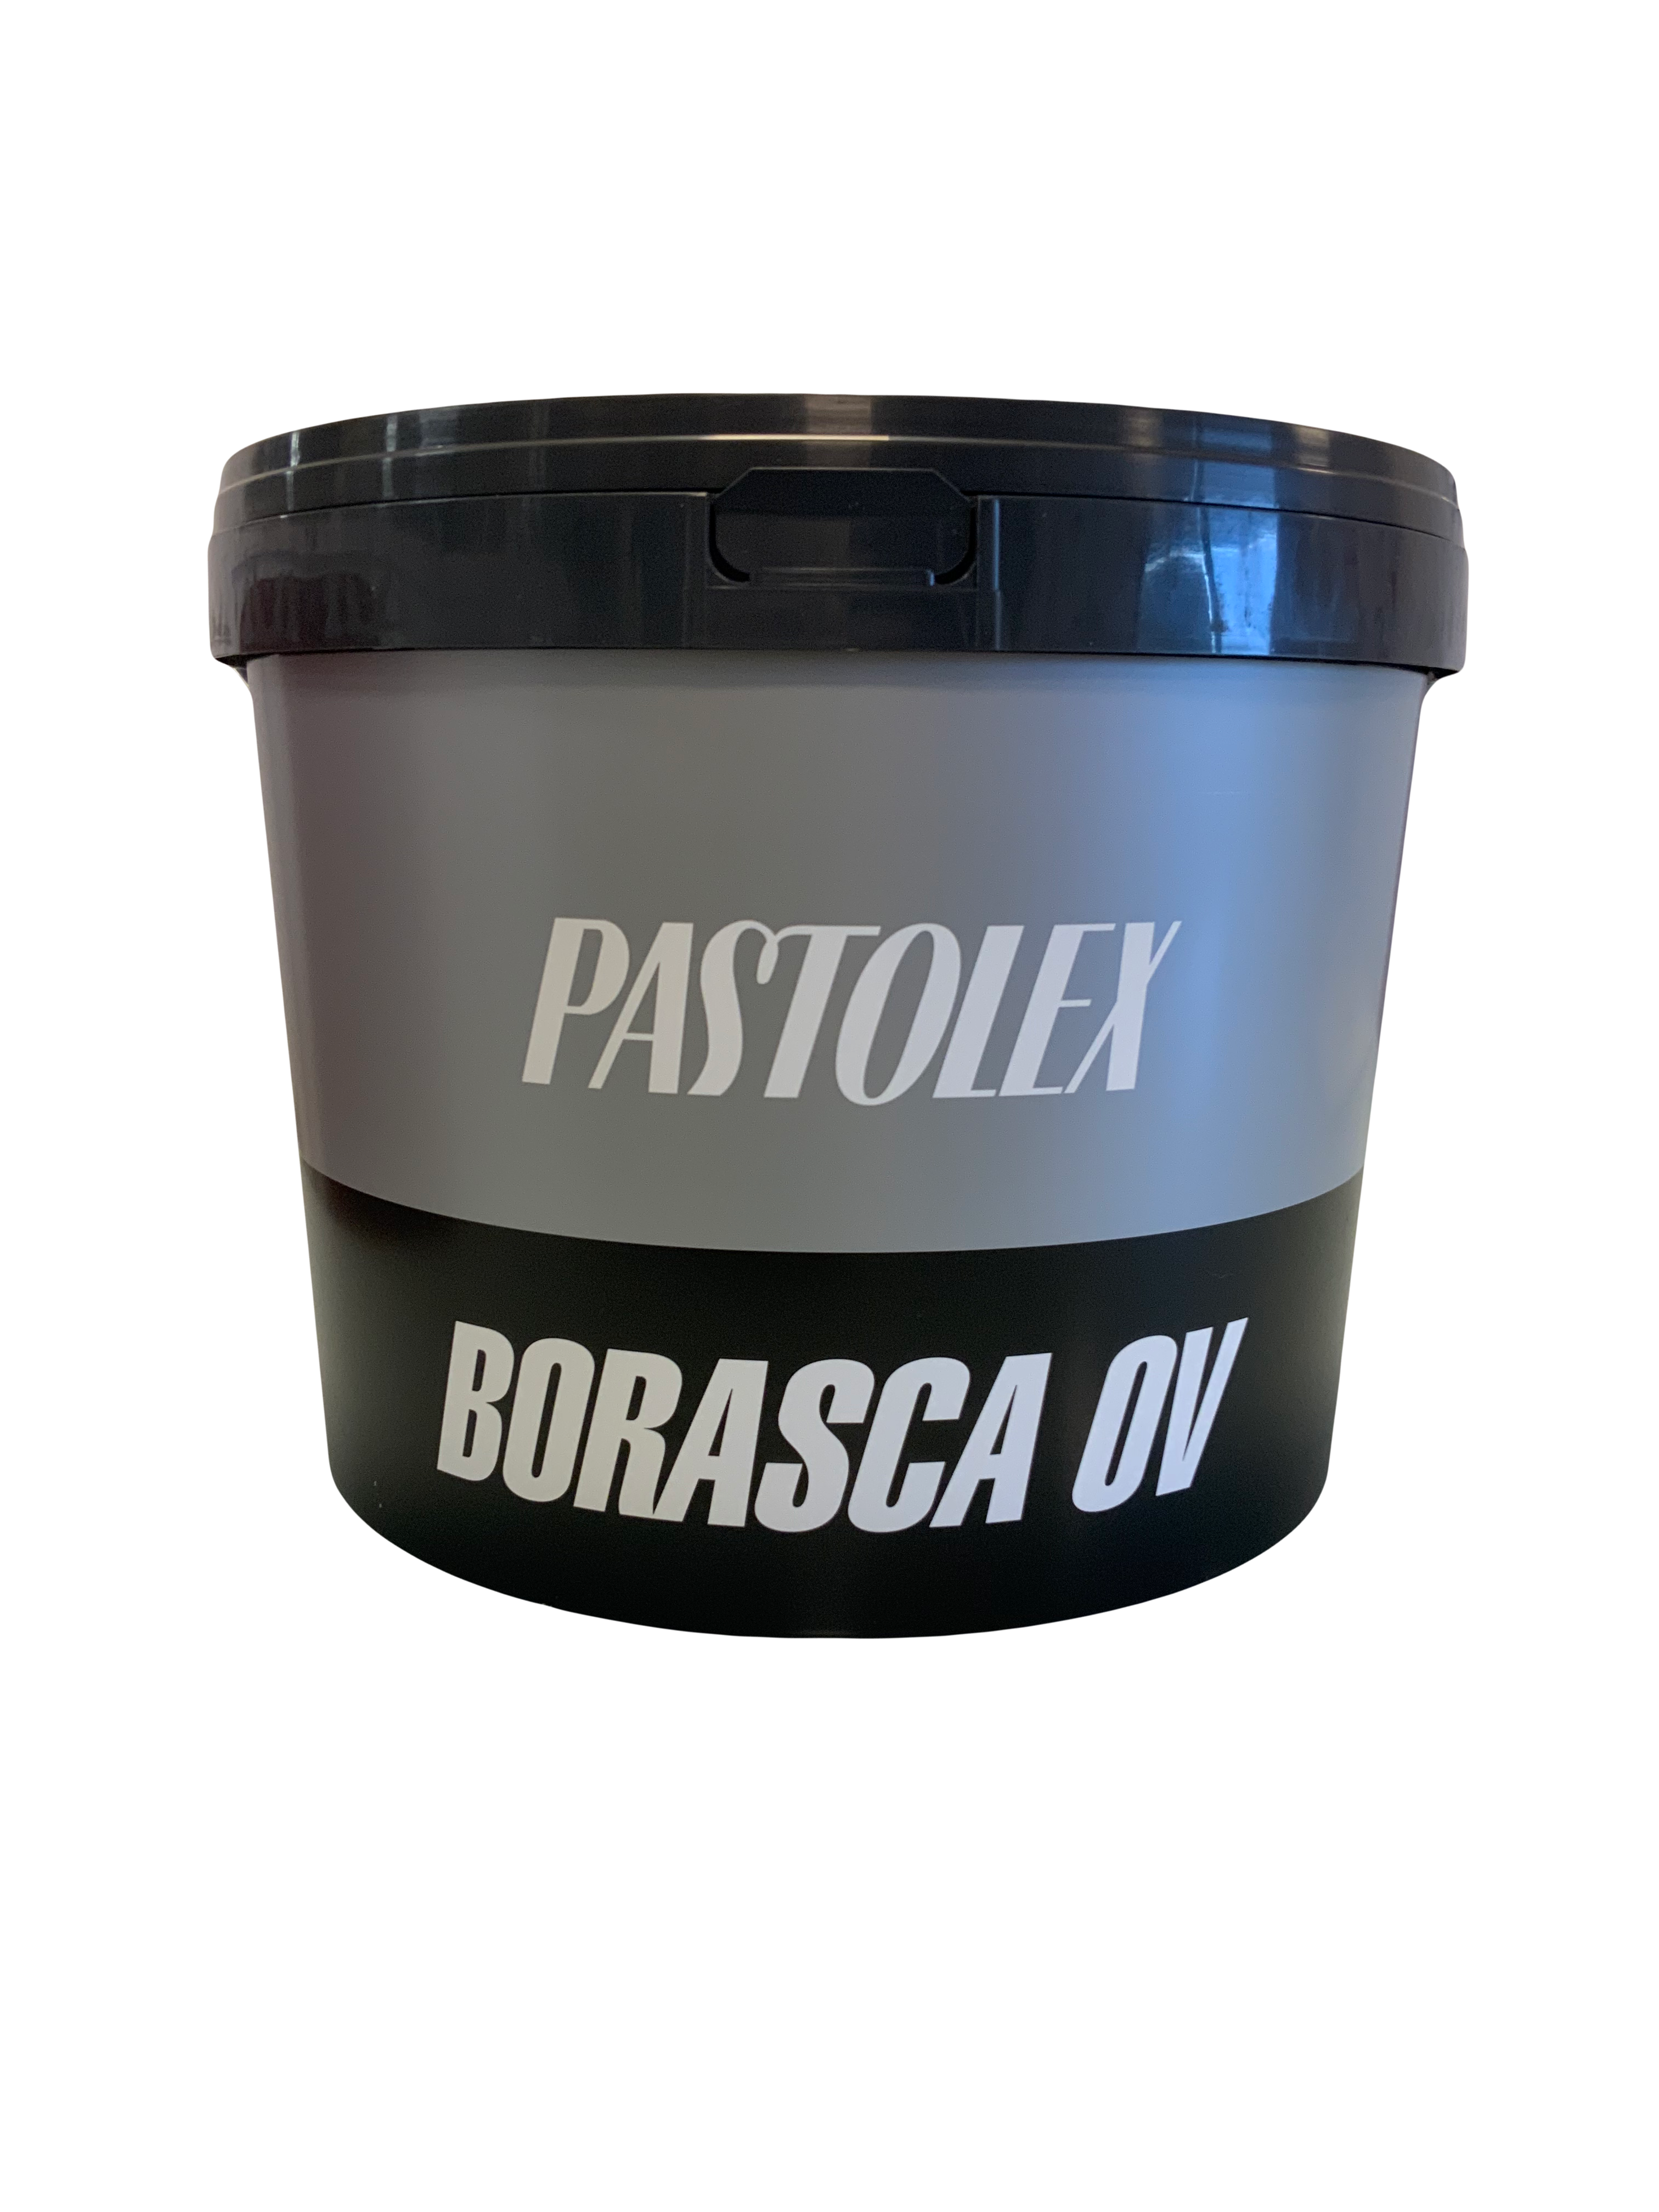 Pastolex Borasca Satin 10 liter